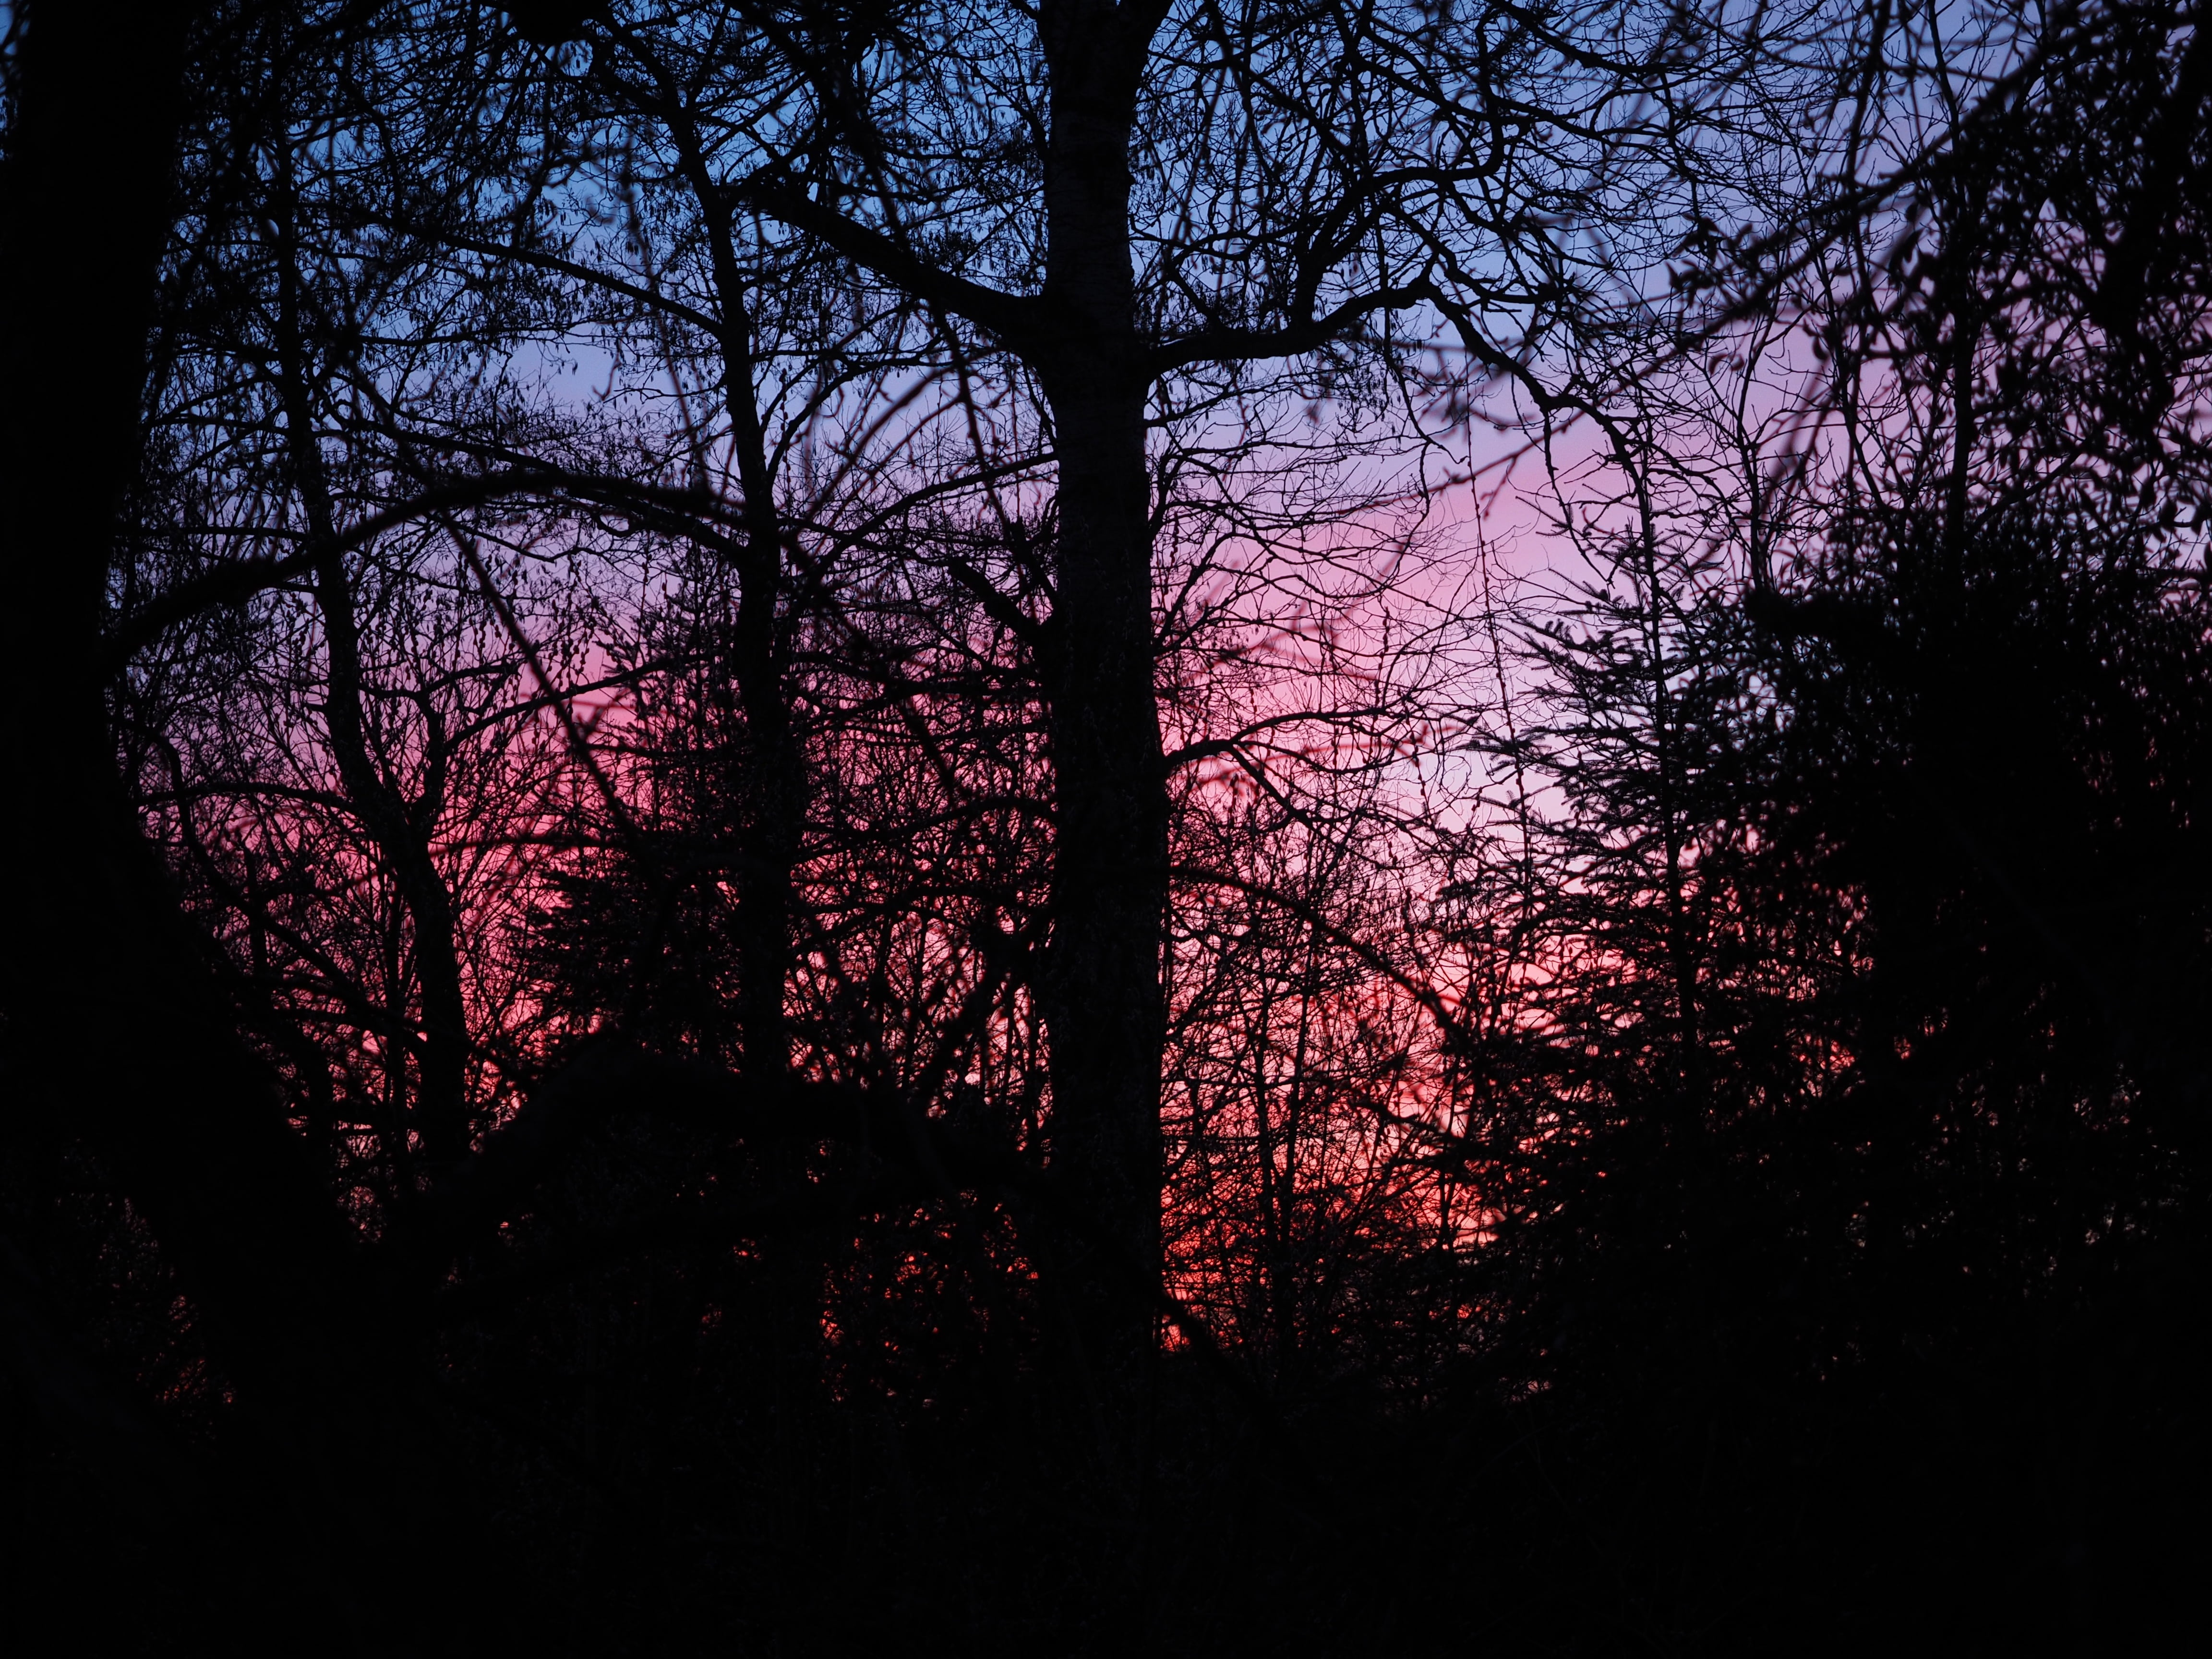 afterglow, evening, abendstimmung, sunset, evening sky, red